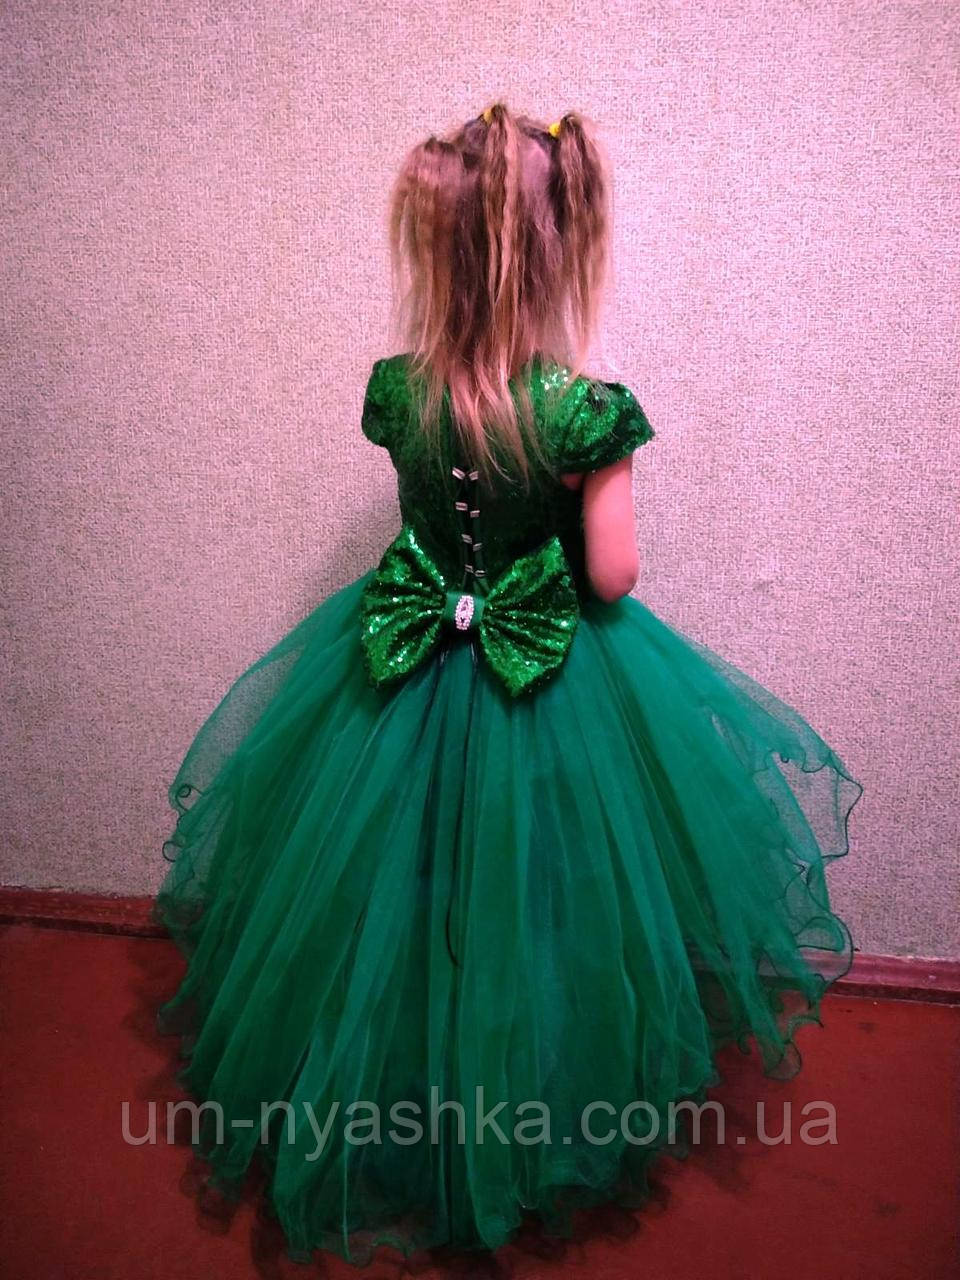 Пишне зелене видовжене блискуче плаття Ялинка-подовжена